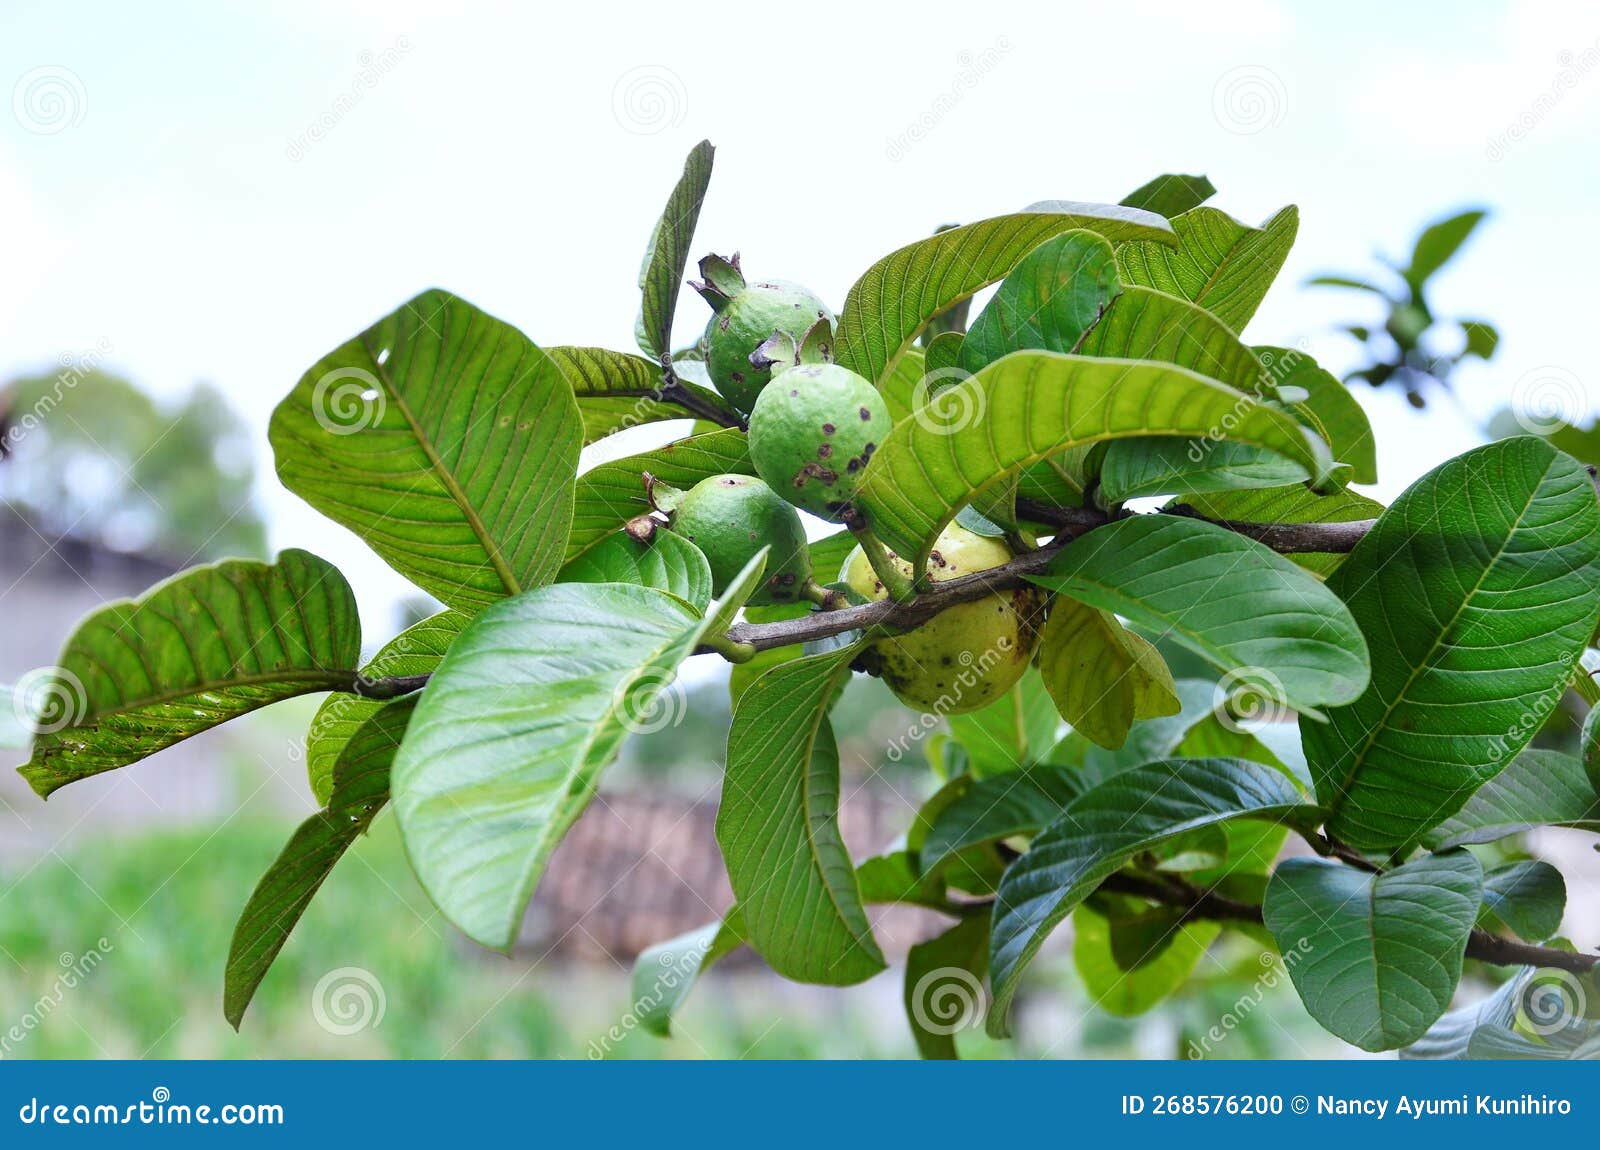 the fruits and leaves of psidium guajava ripening